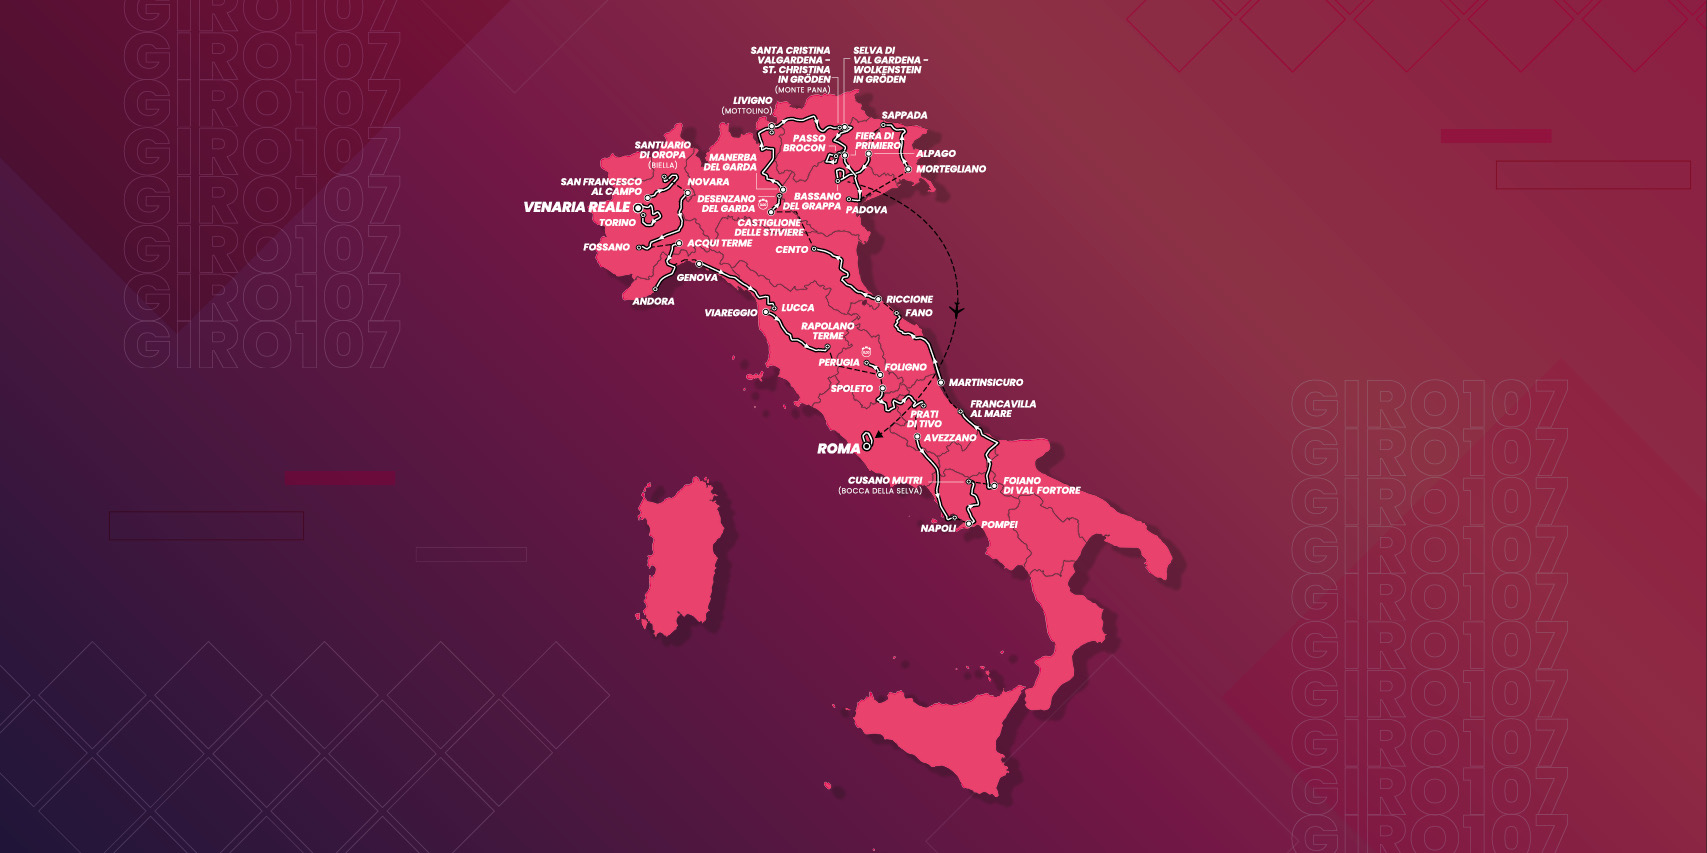 CYCLING Giro d’Italia 2.UWT 2024 (ITA) sportpress.international